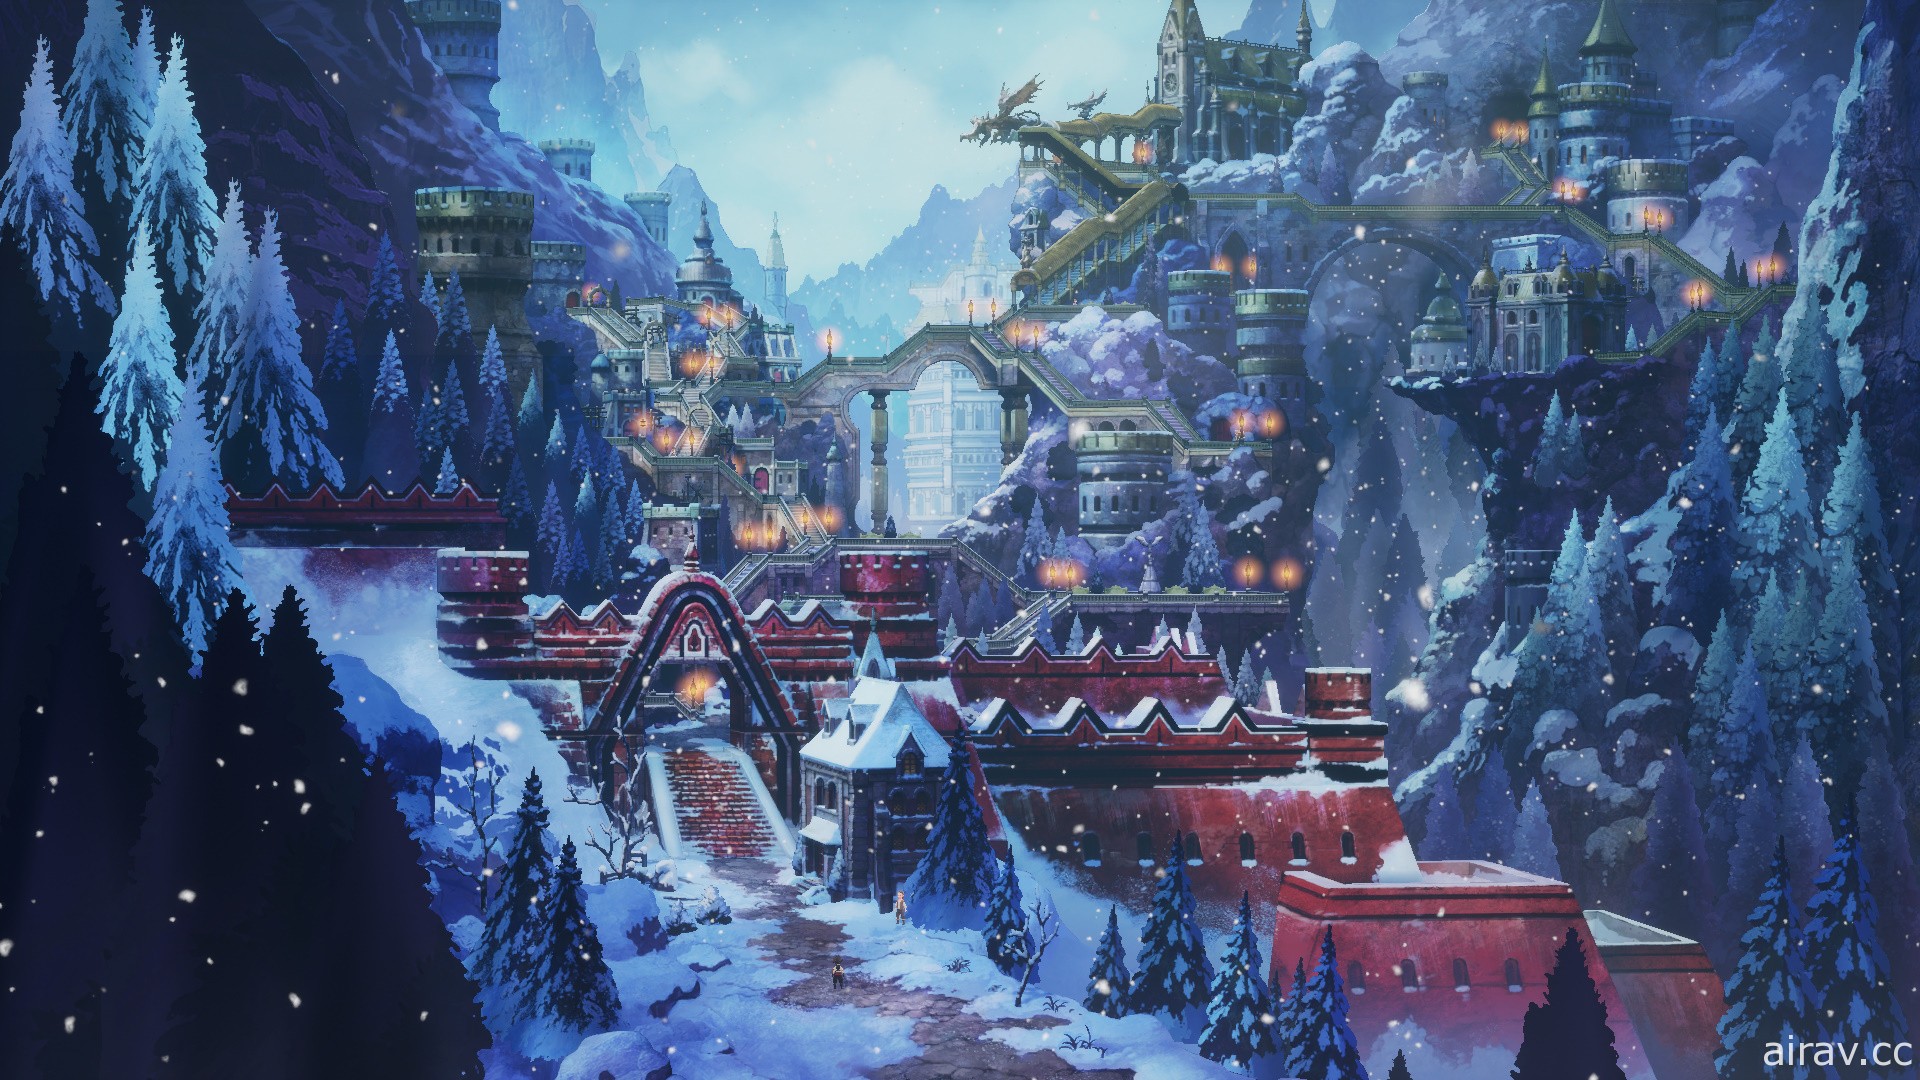 《Bravely Default II》介紹冰天雪地之國「拉姆達路」以及龍騎士、劍聖等職業